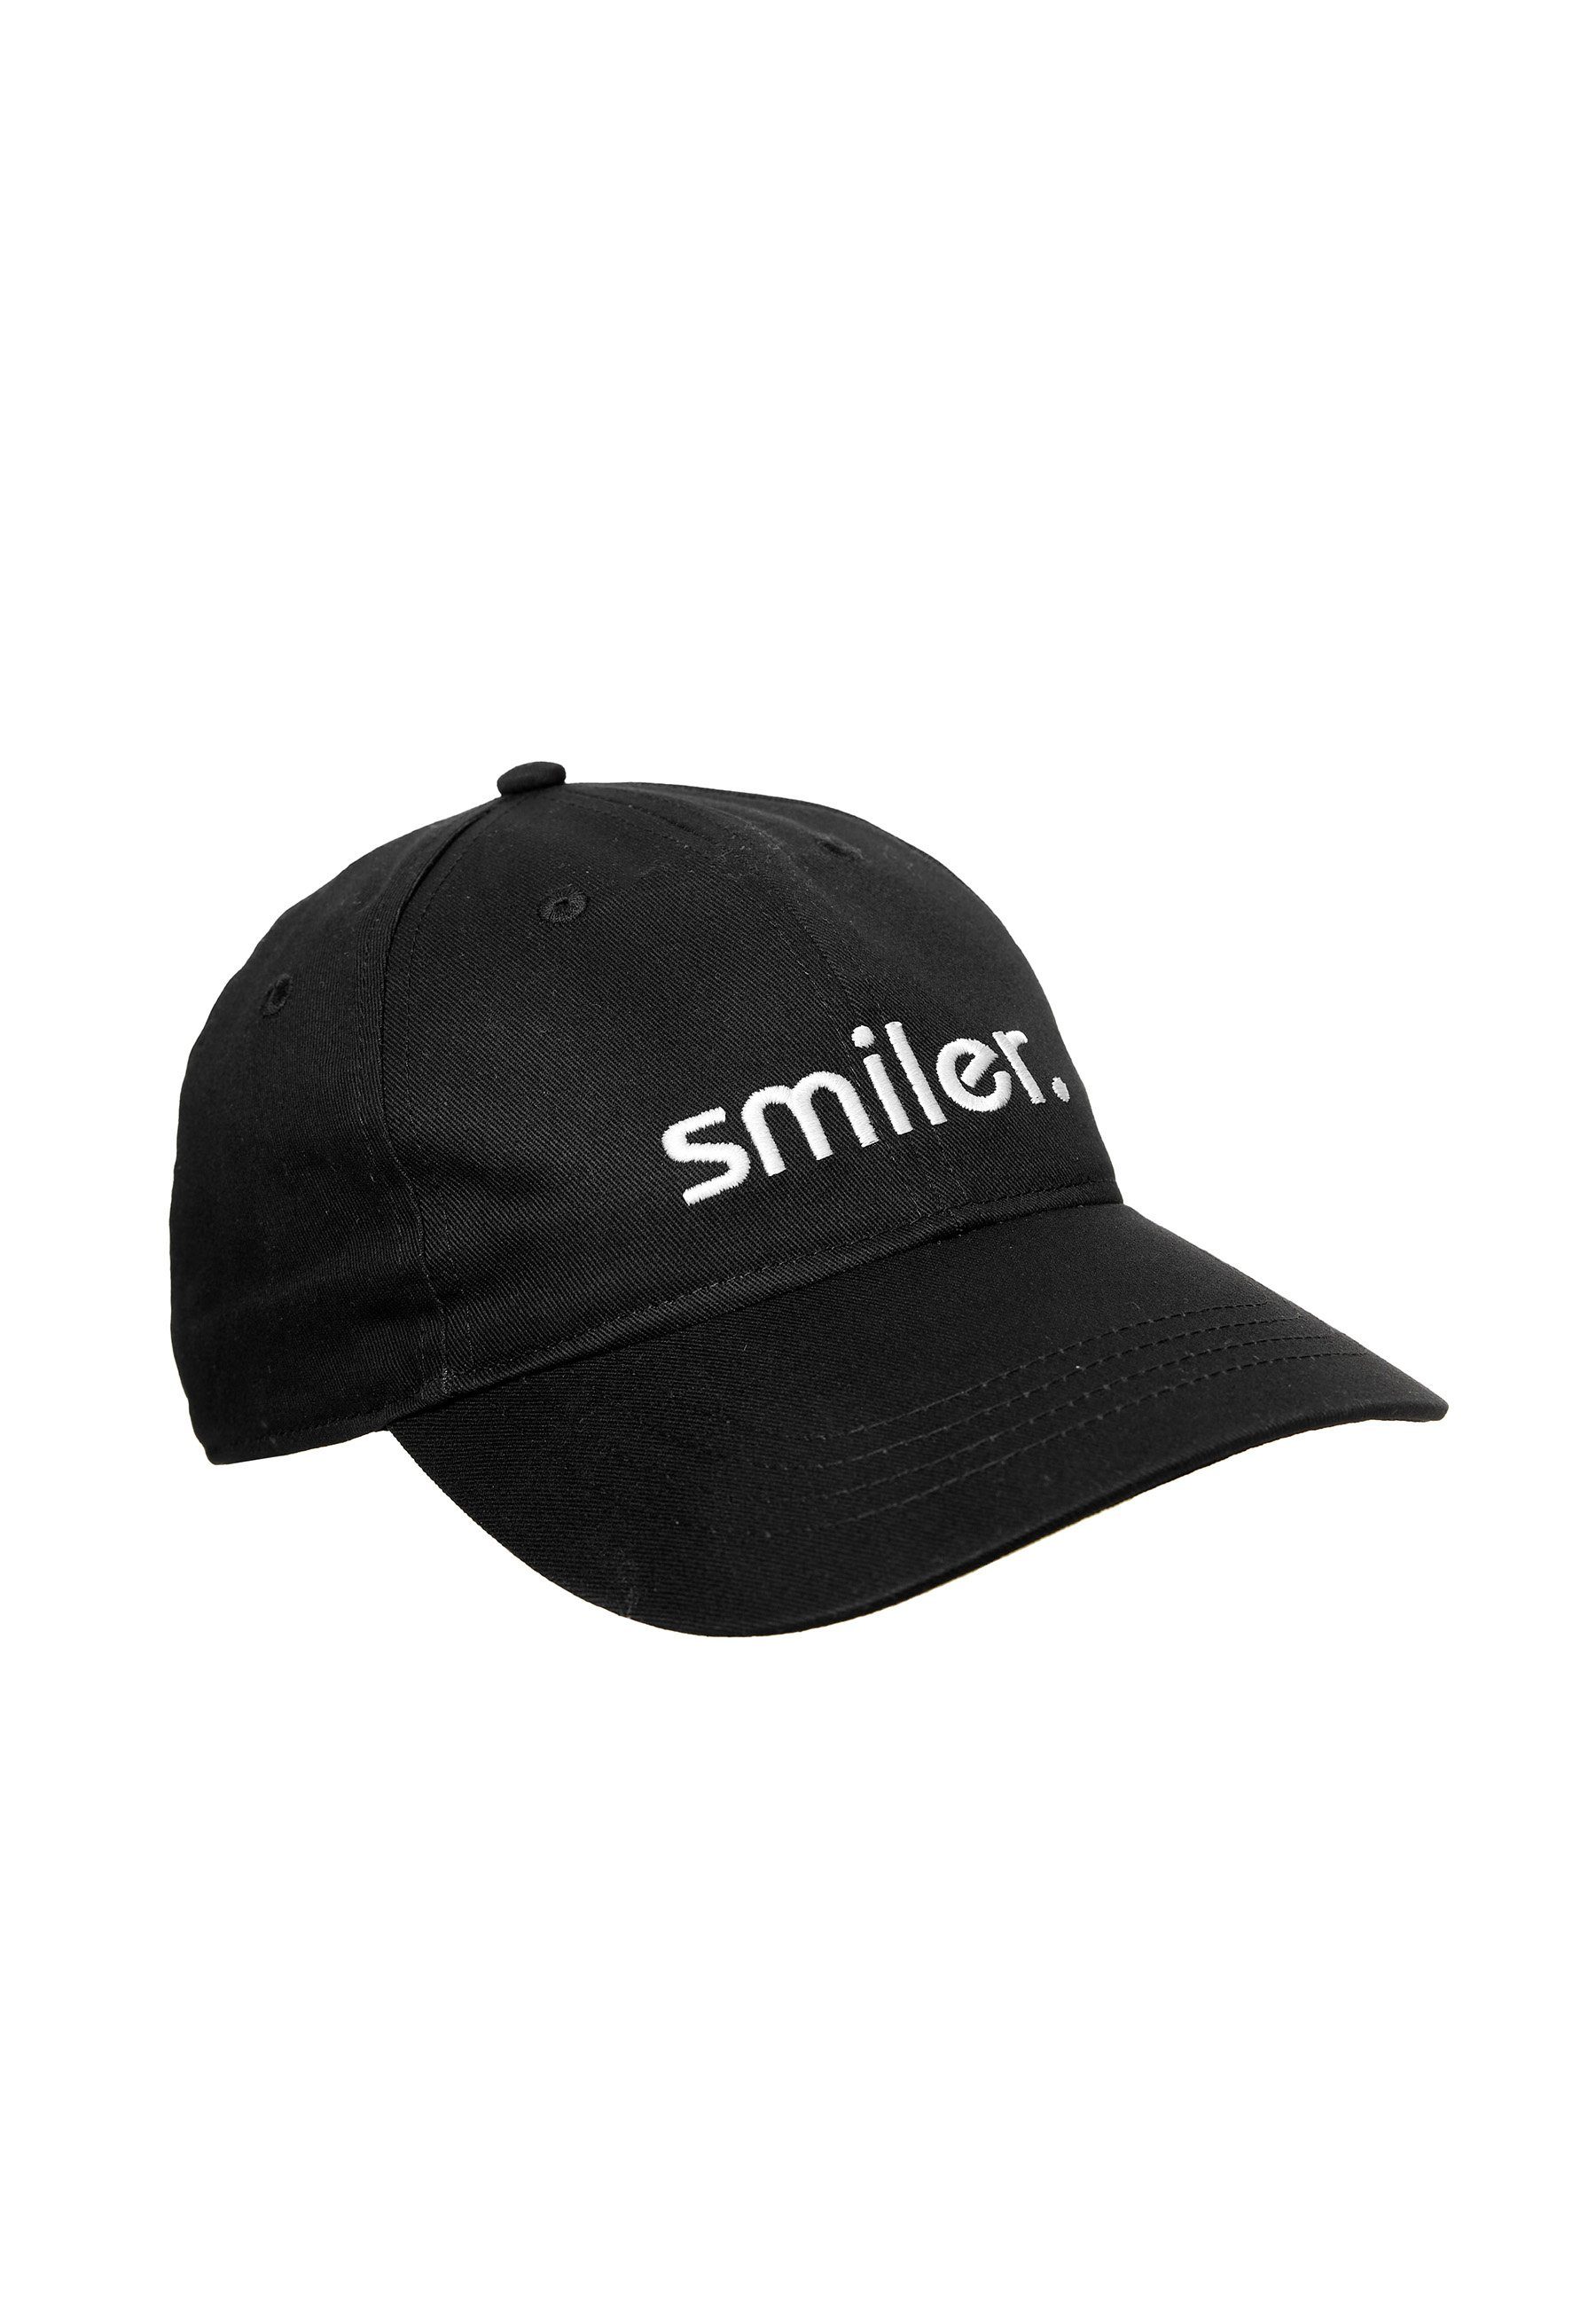 smiler. Baseball Cap mini-sunny. schwarz | Baseball Caps